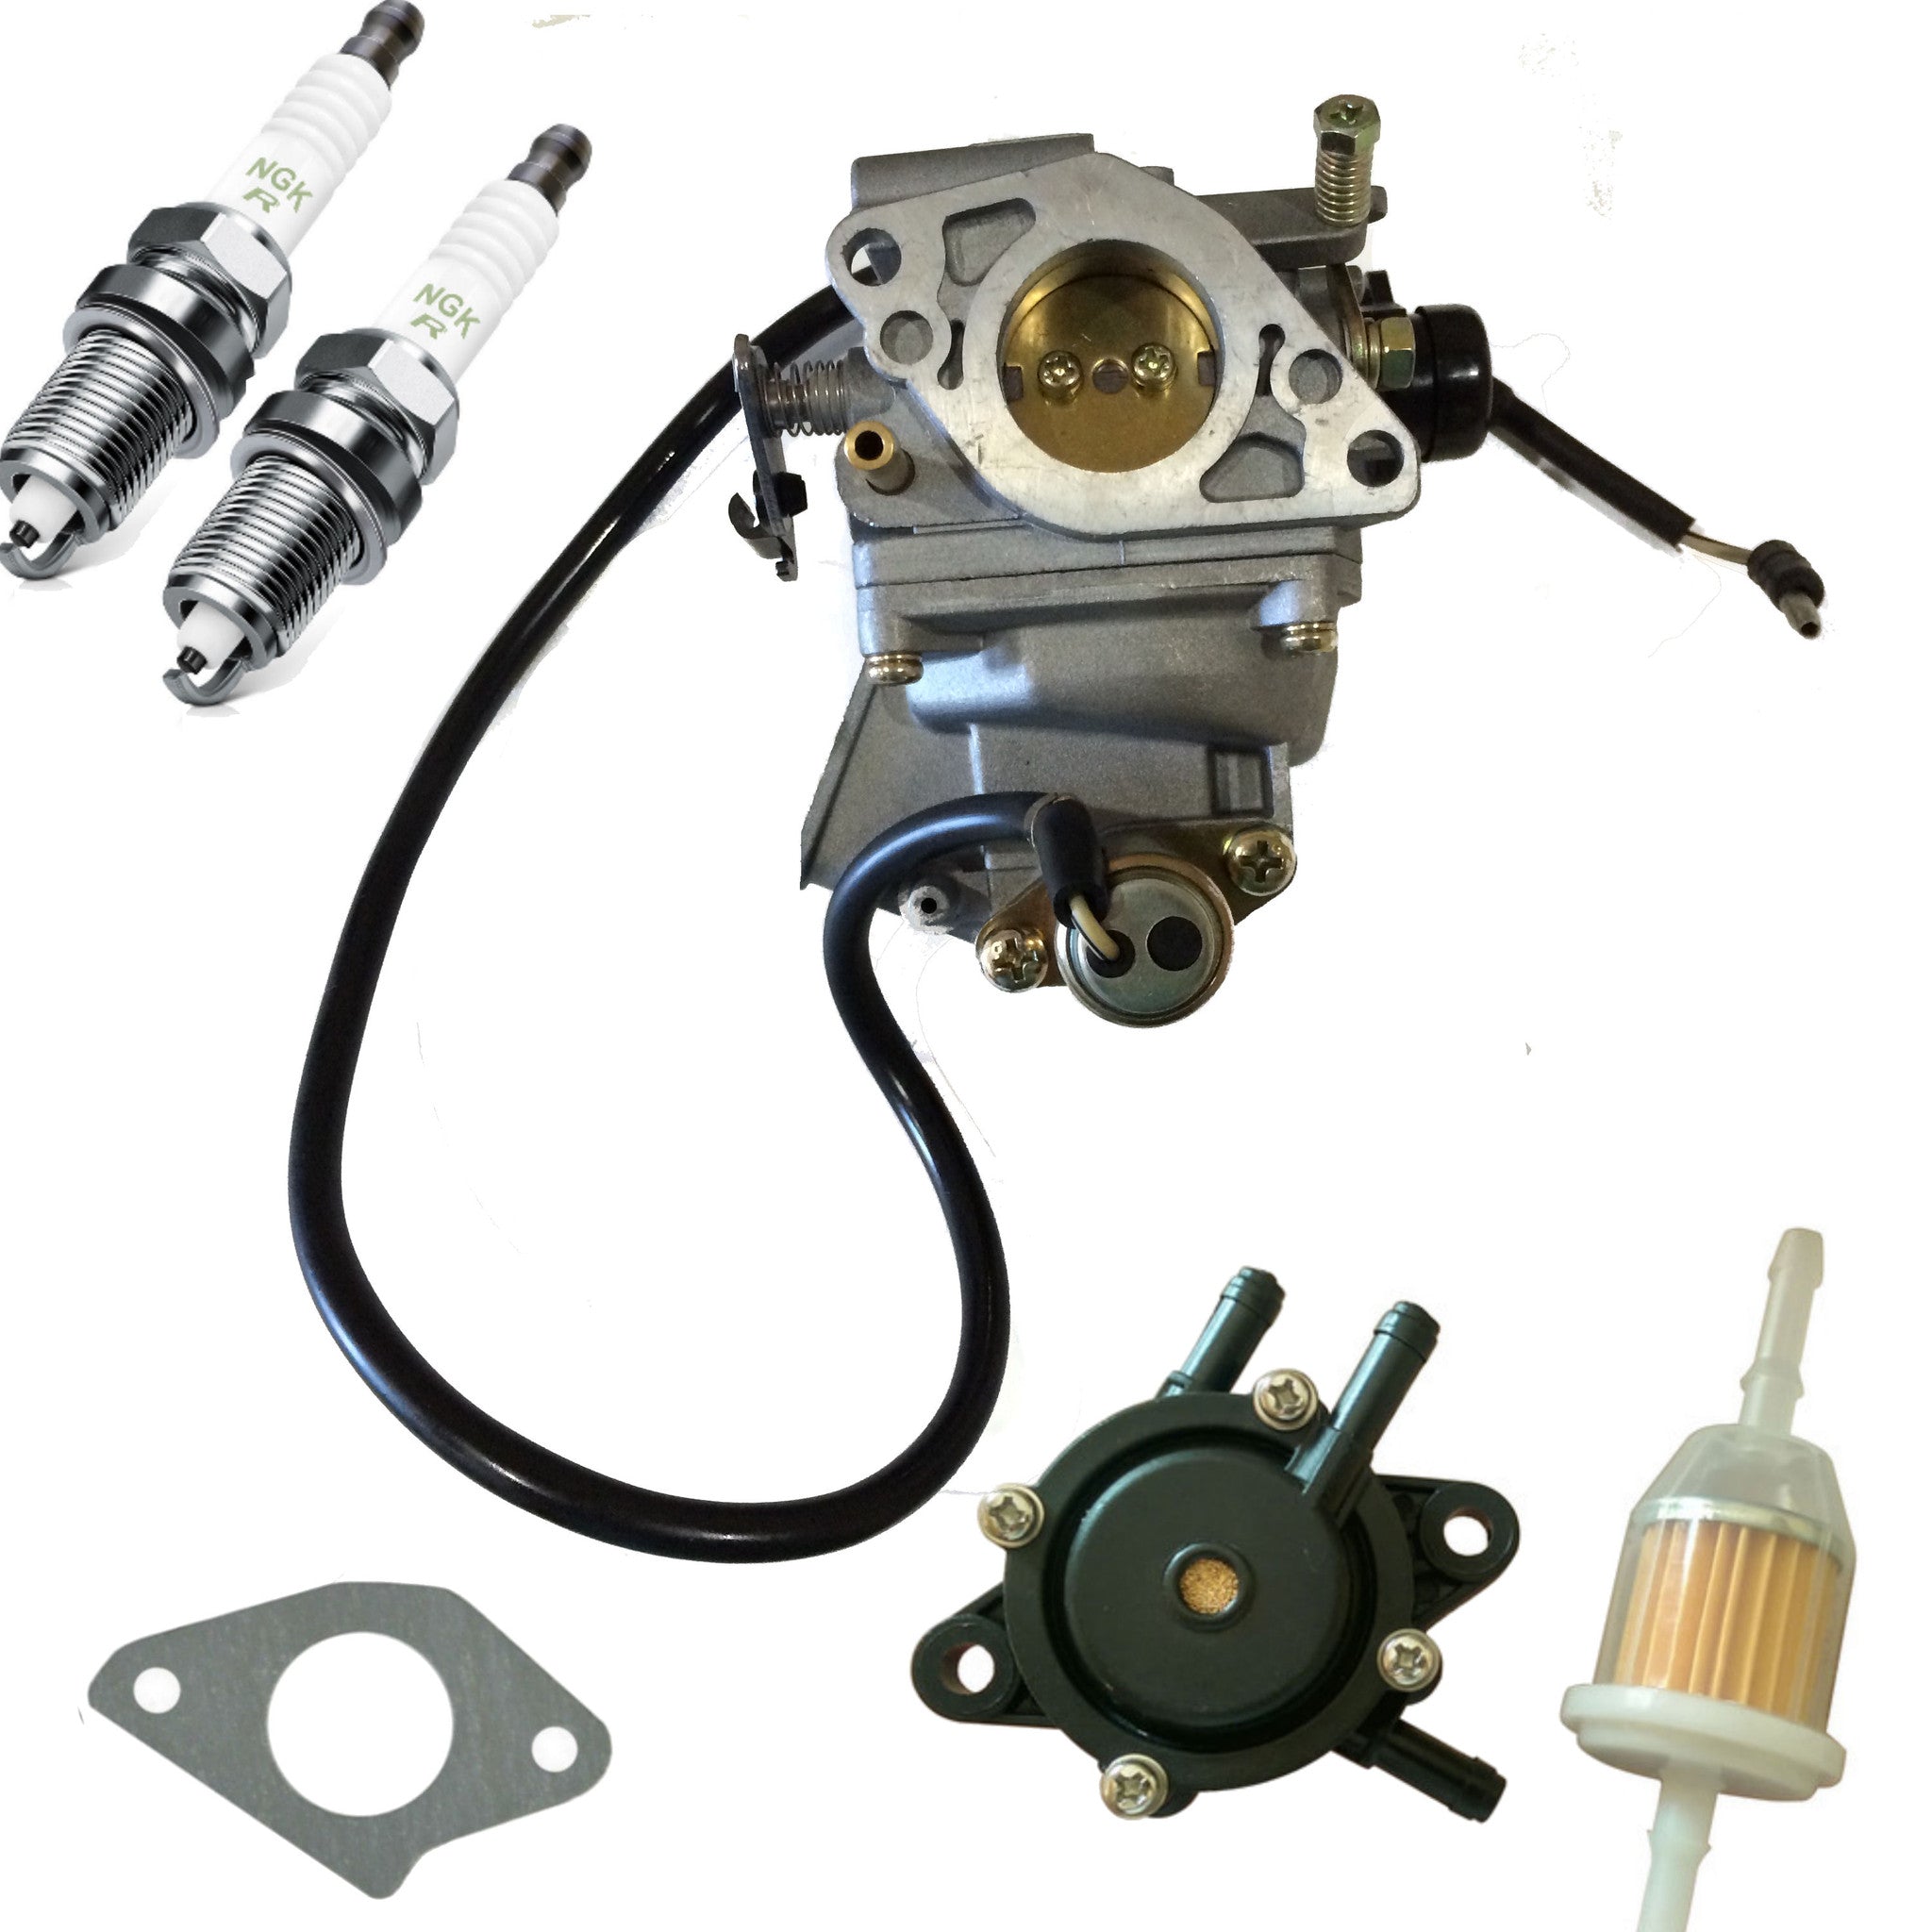 Carburetor Carb for Honda w Fuel Pump Filter Plugs GX620 Gx610 Mower Gas Engine - AE-Power